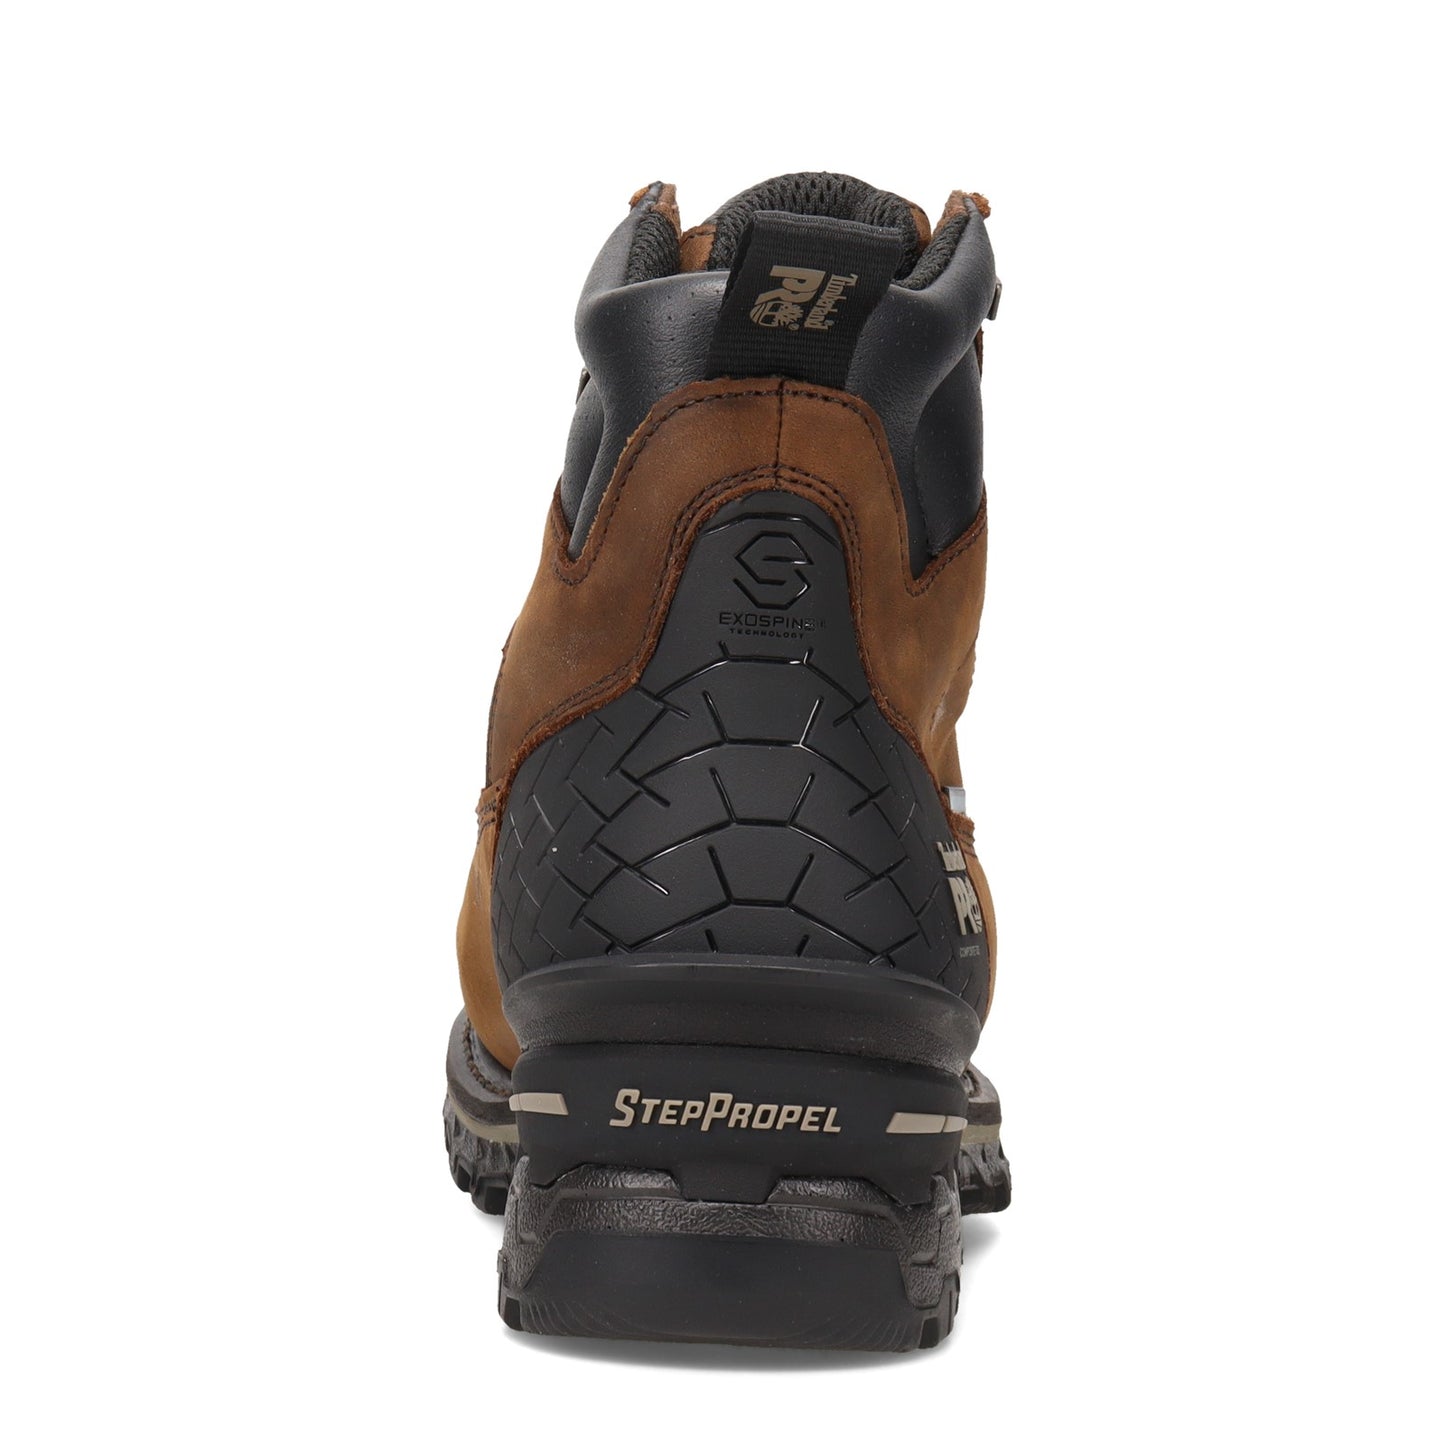 Peltz Shoes  Men's Timberland Pro Boondock HD Composite Toe Work Boot BROWN TB0A29RK214